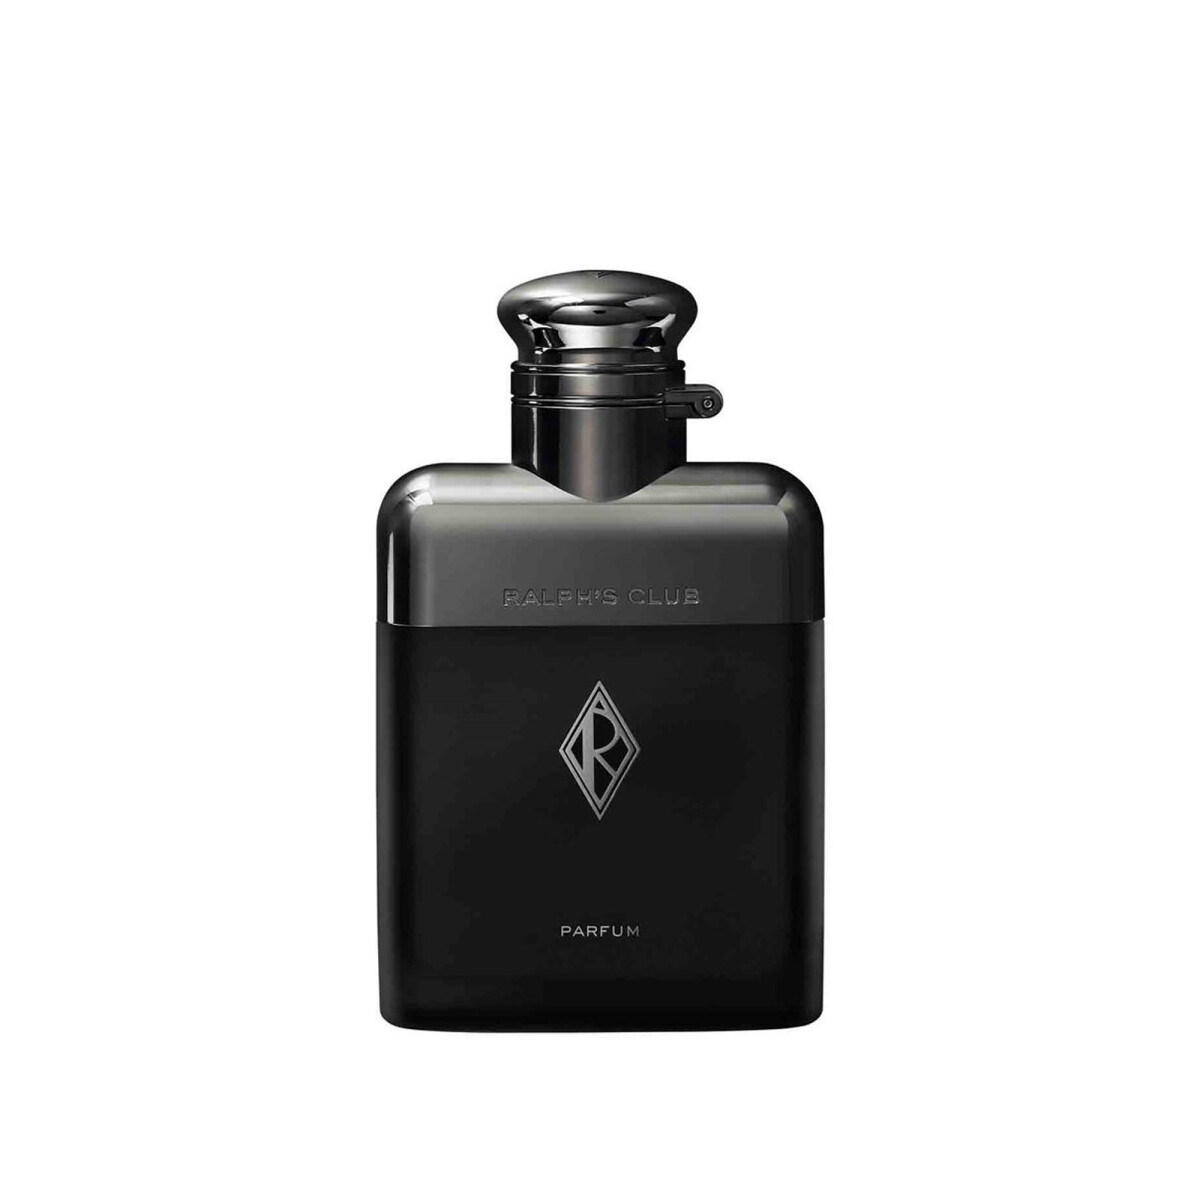 Fragancia Masculina Ralph Lauren Club Parfum - 100 ml 